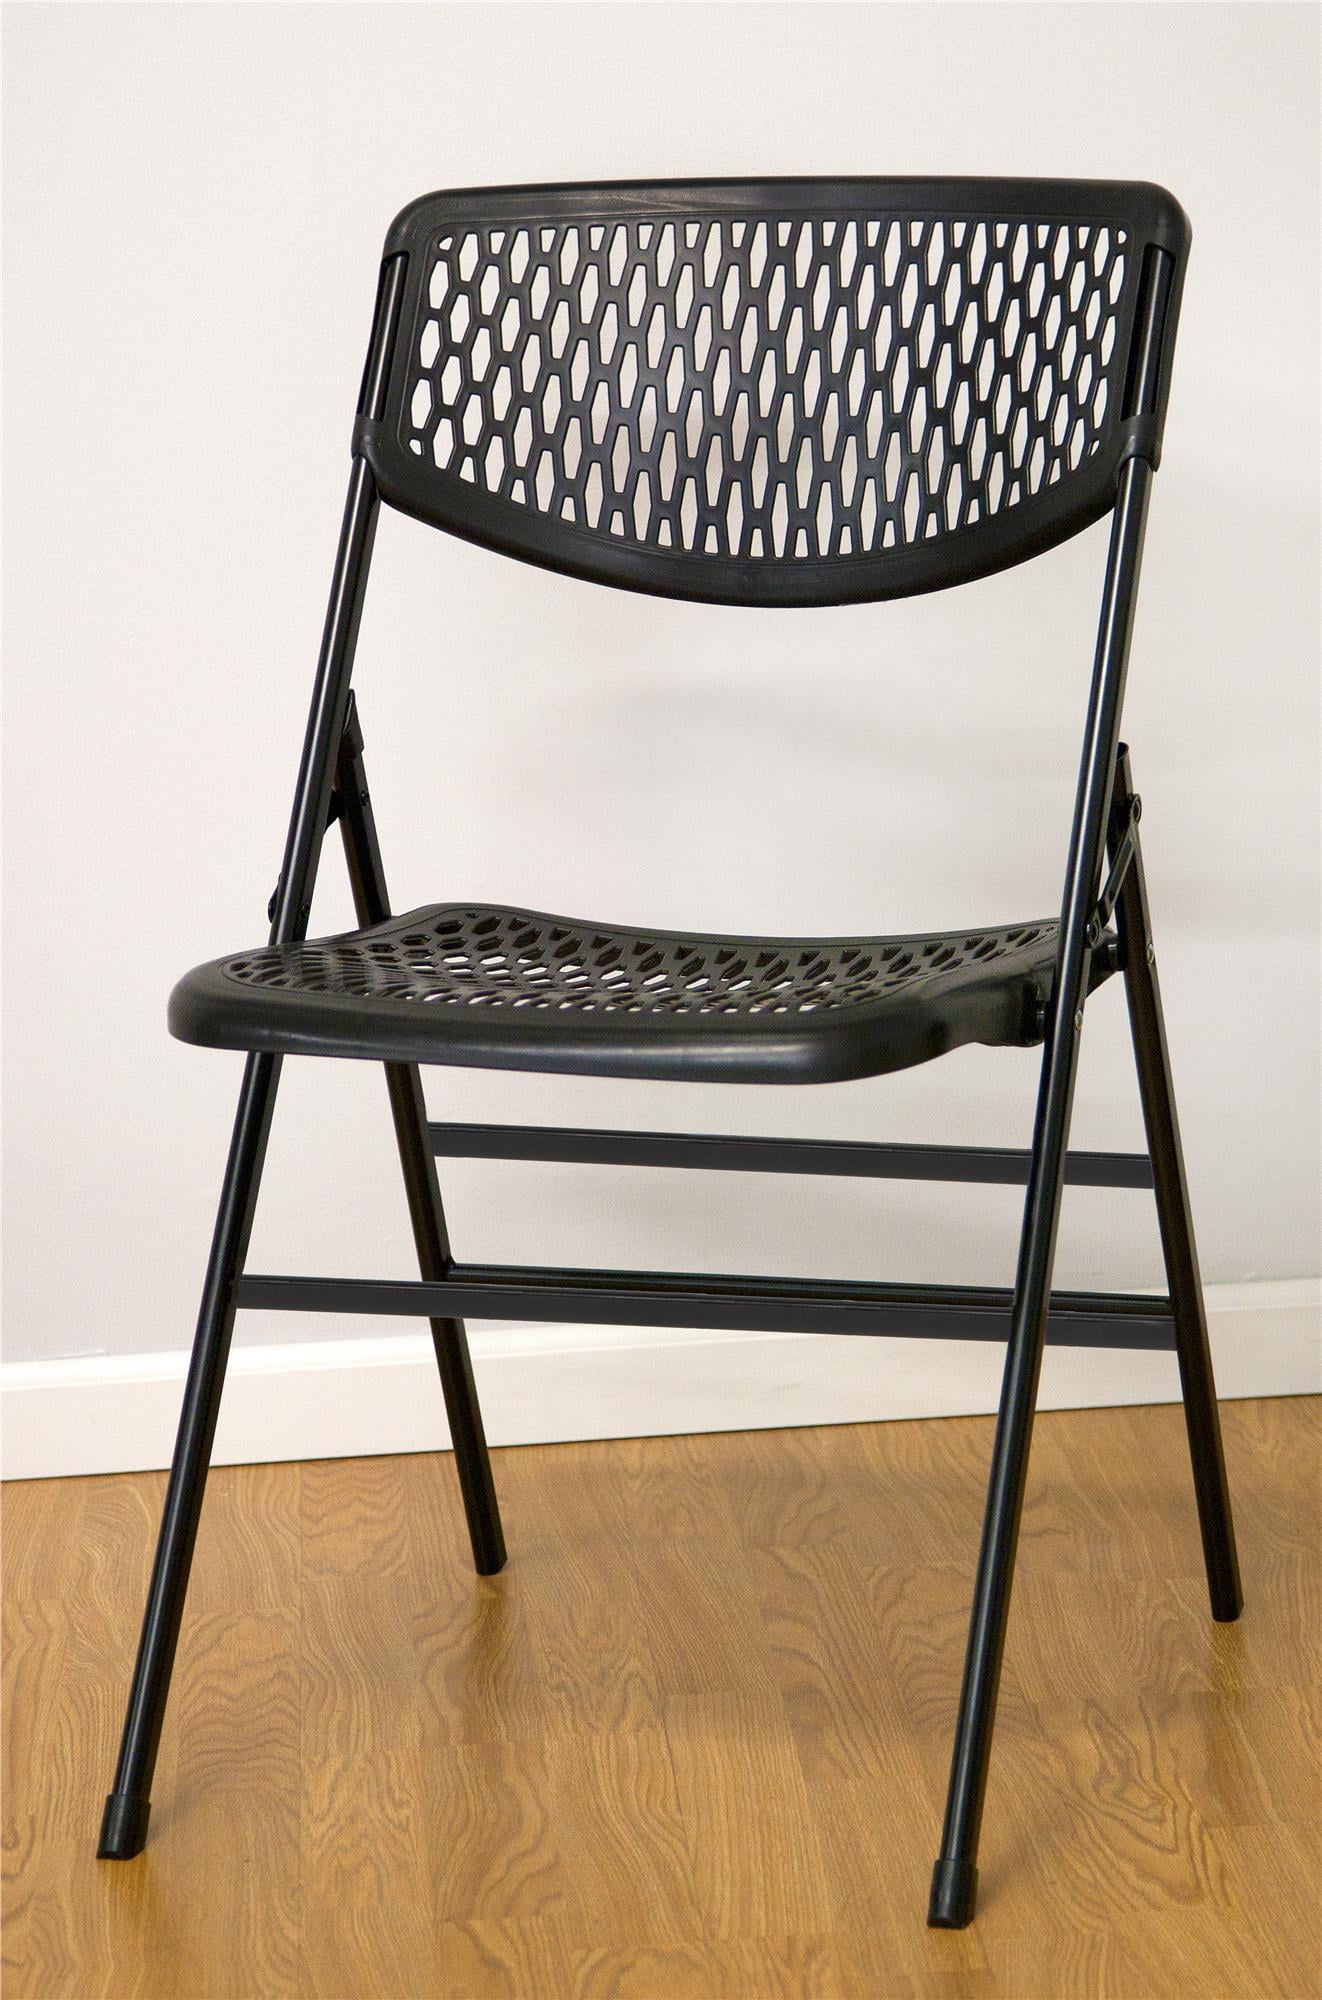 COSCO Commercial Resin Mesh Folding Chair, Black, 4pack